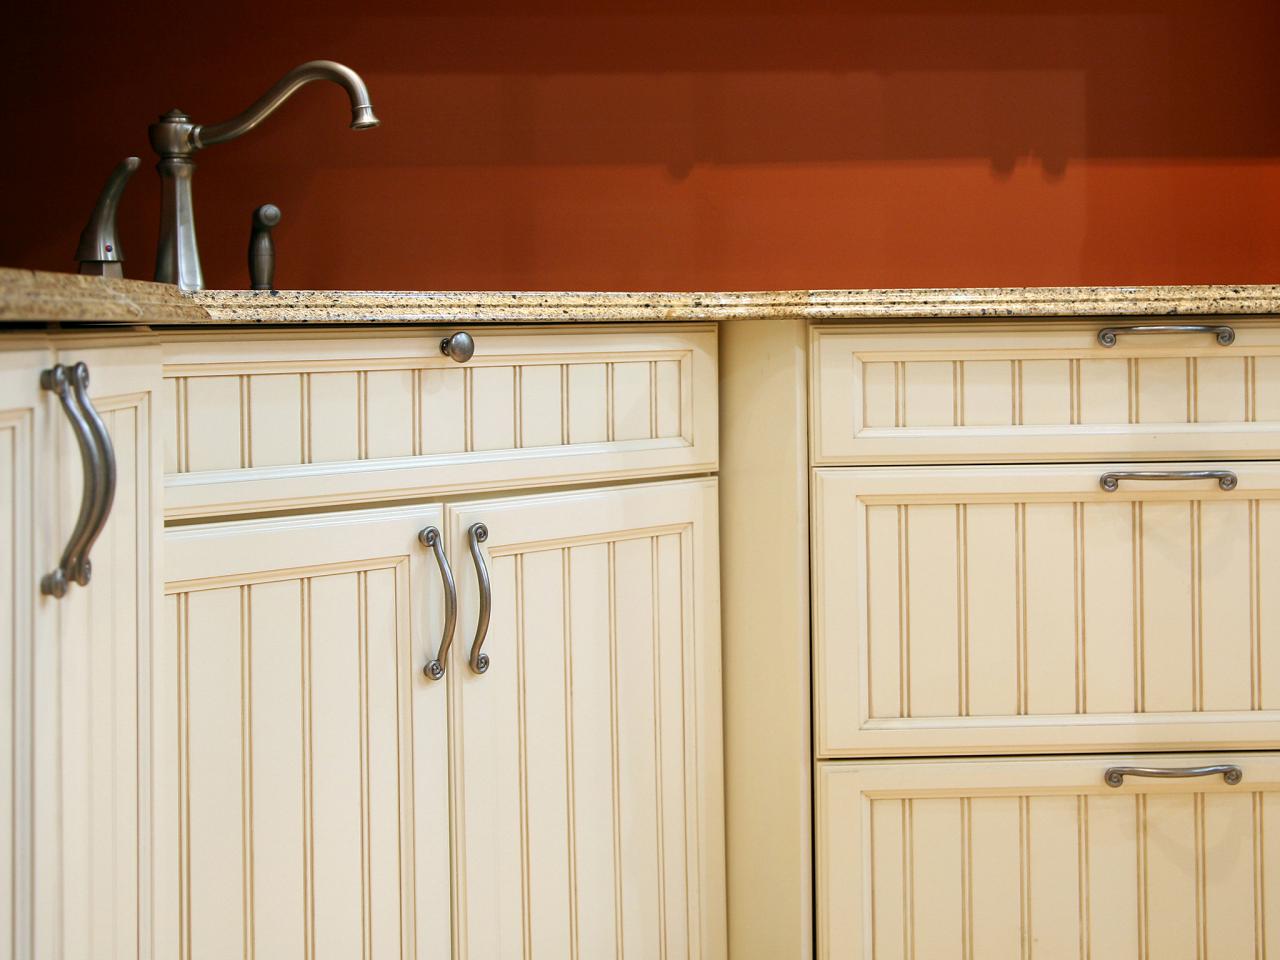 Kitchen Cabinet Door Handles And Knobs, Where Do You Place Door Knobs On Kitchen Cabinets